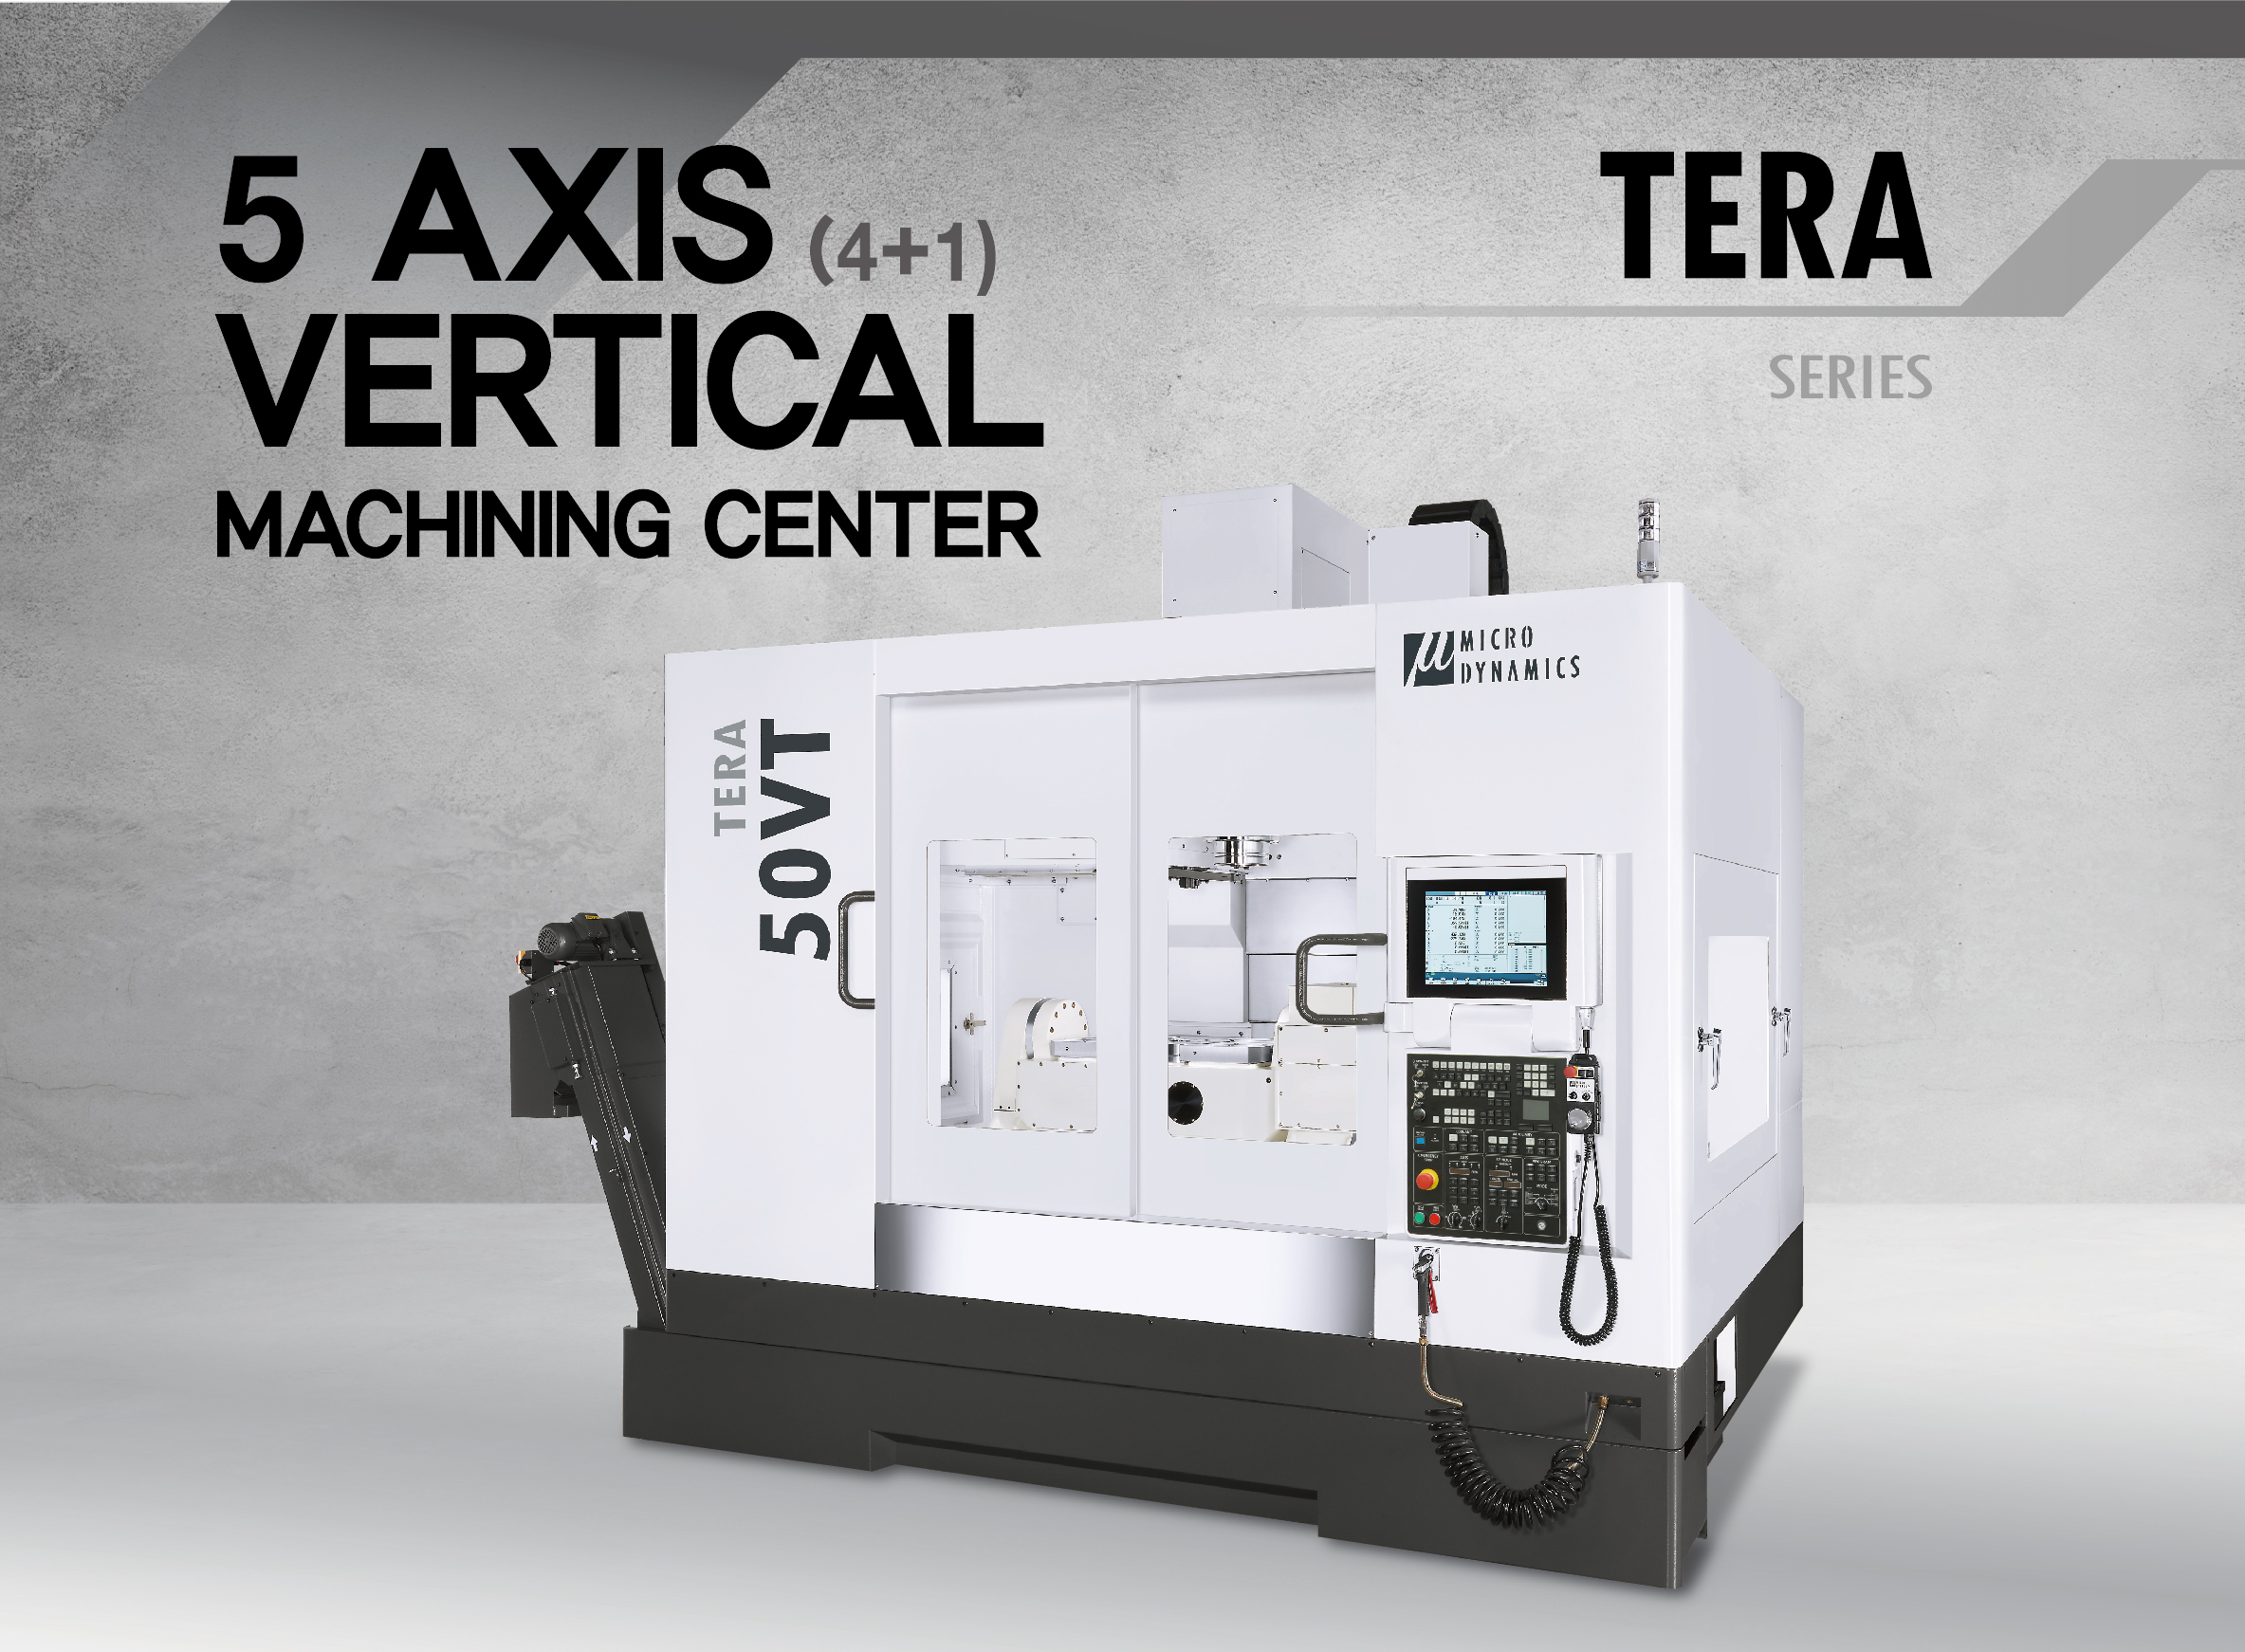 
                                TERA sereis - 5 Axis Vertical Machining Center
                            